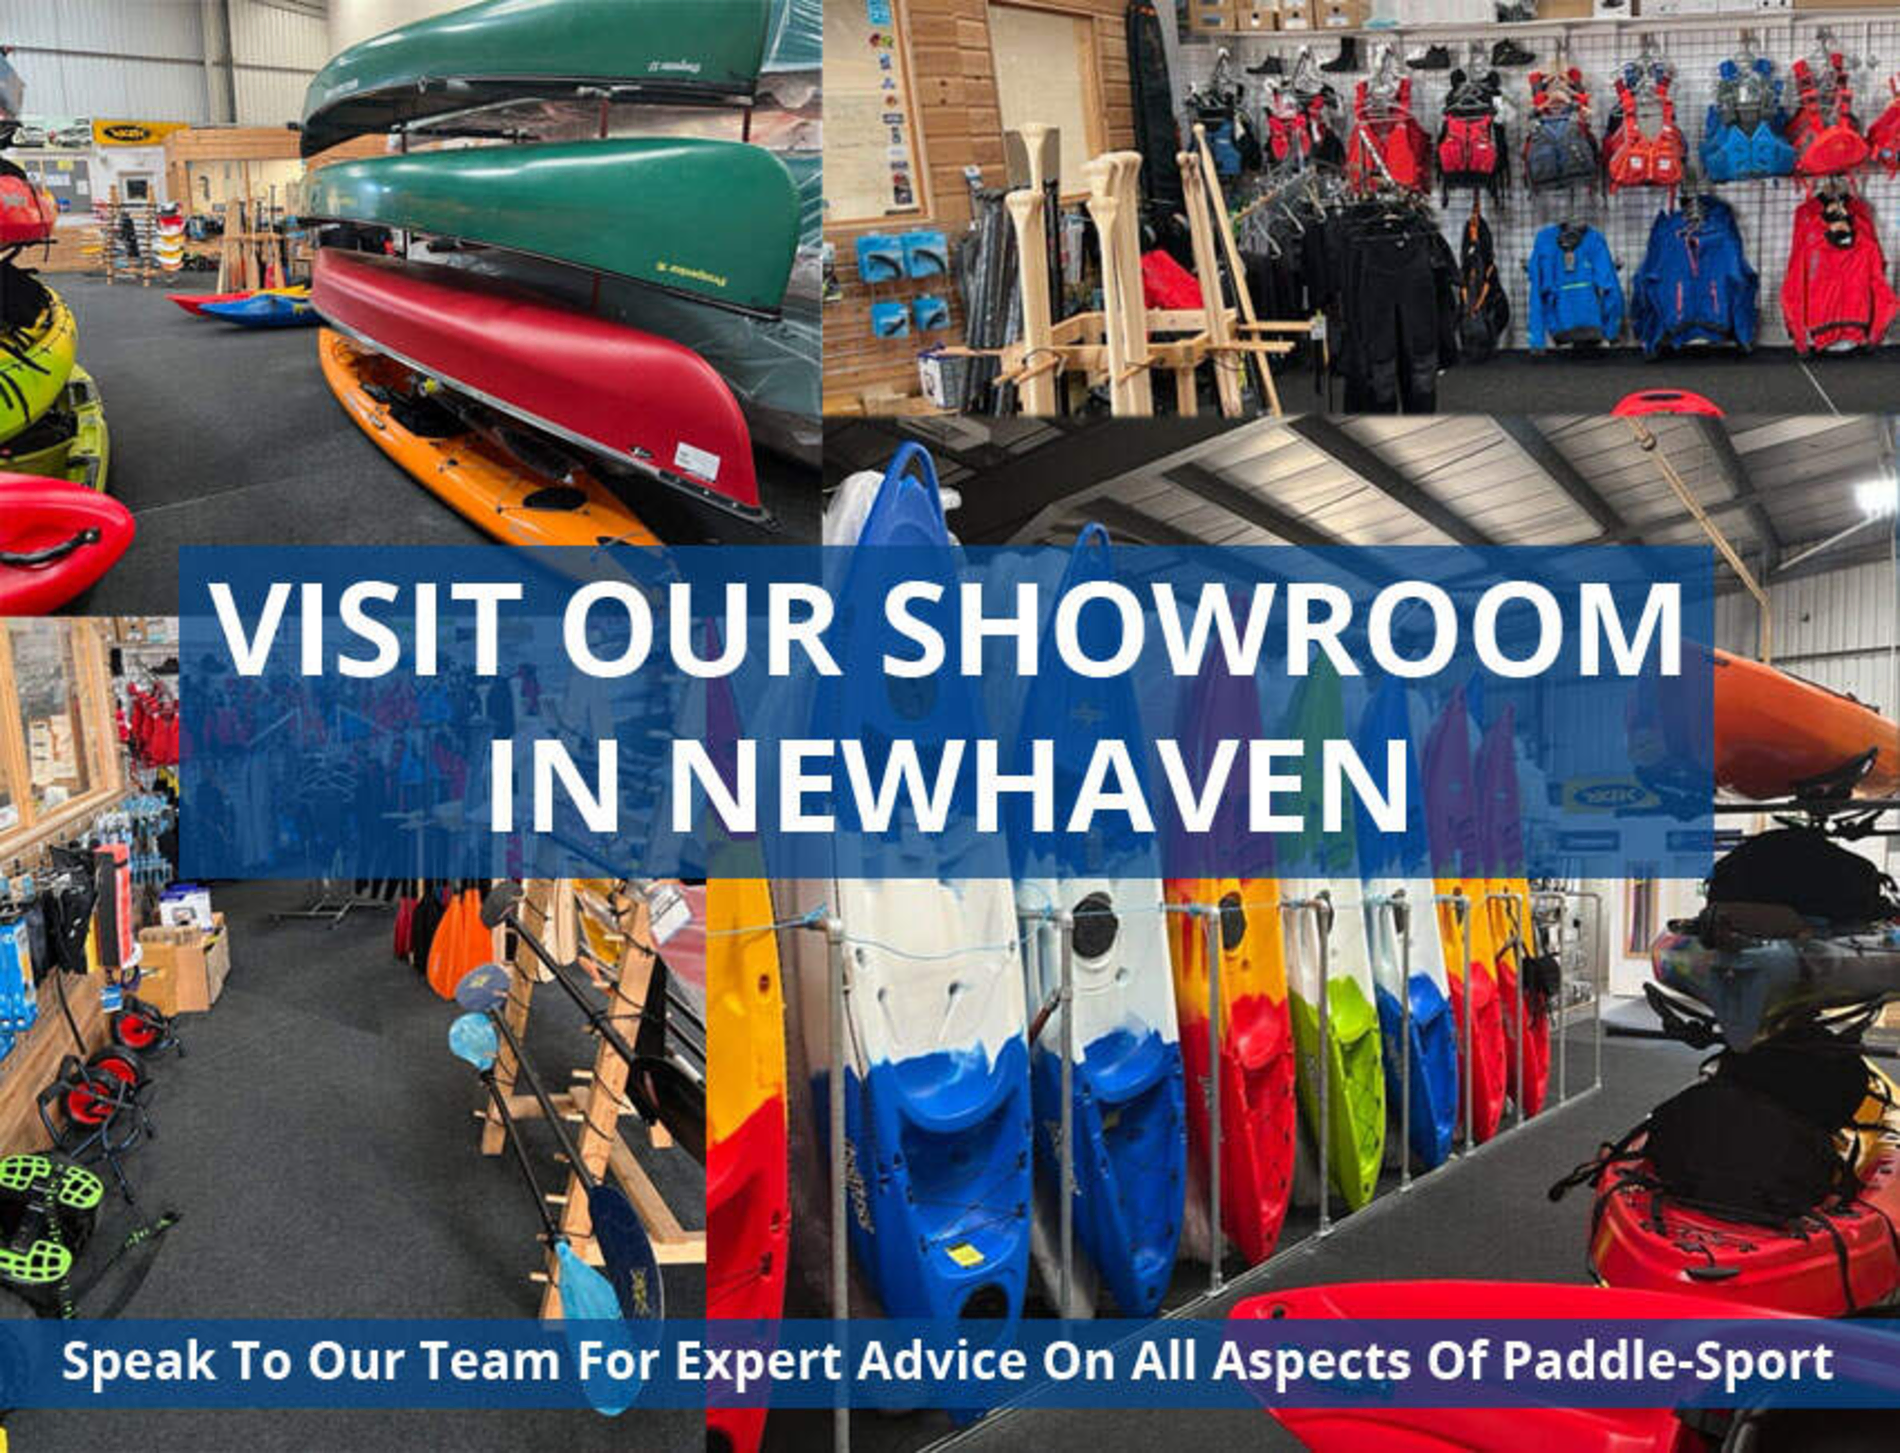 Brighton Canoes & Kayaks - Newhaven, East Sussex Showroom Store